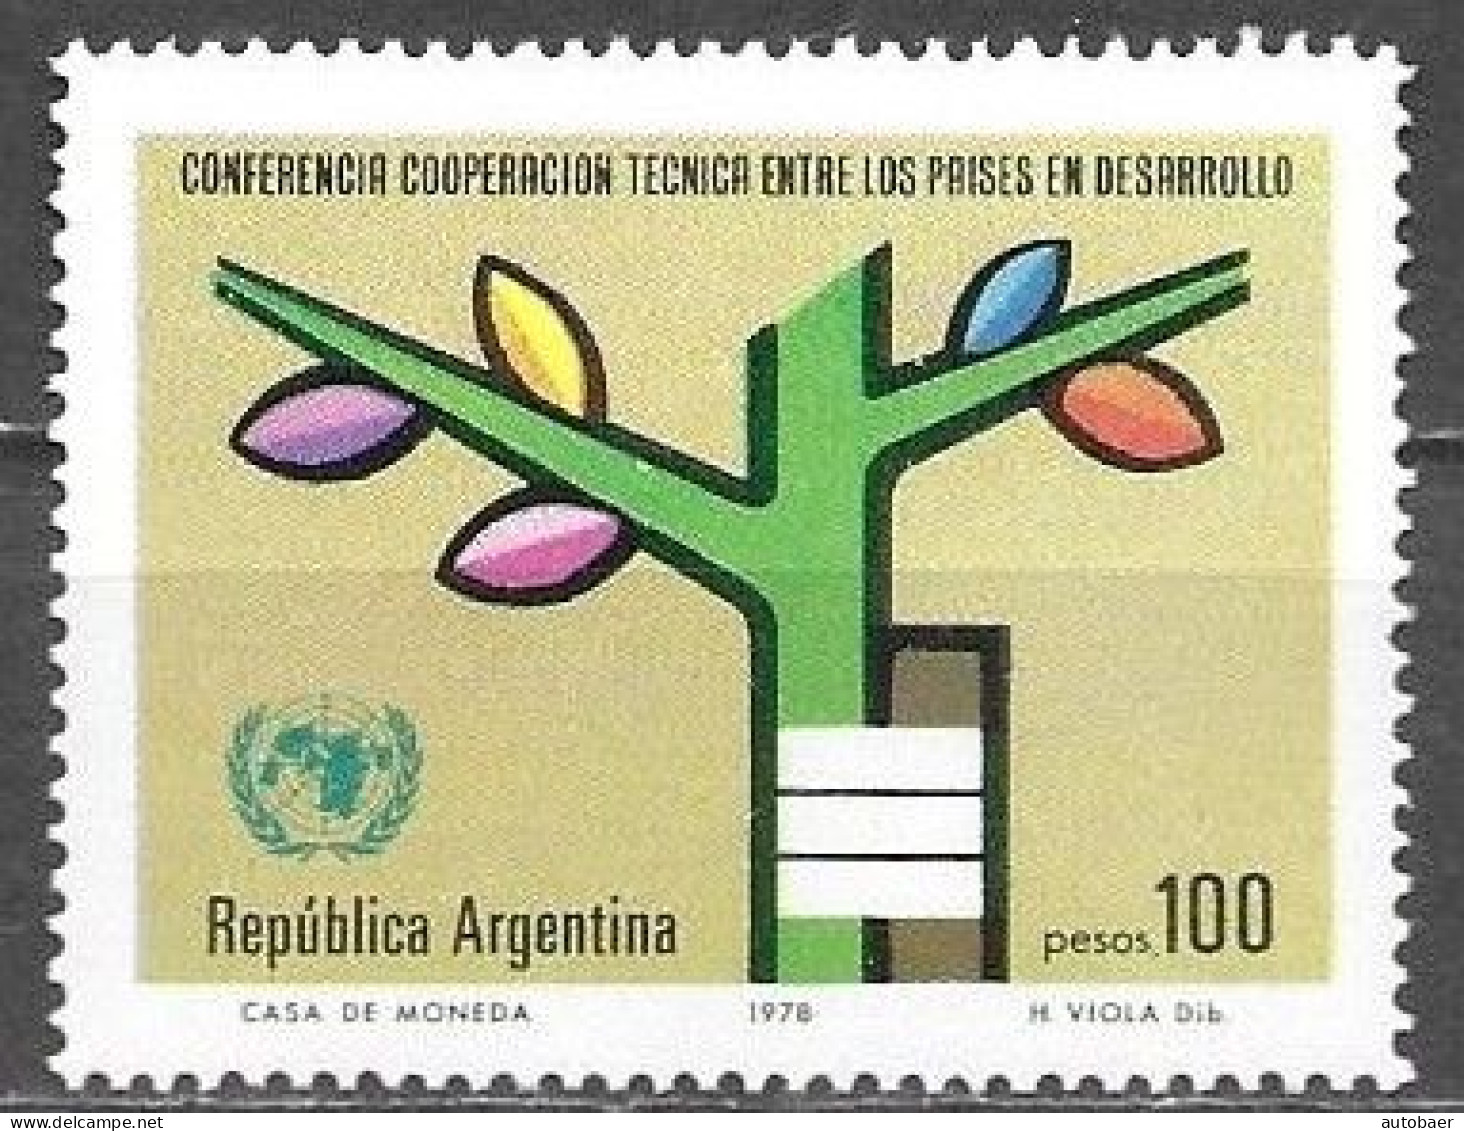 Argentina 1978 Conferencia Cooperacion Conference Cooperation Developing Countries Mi. 1353 MNH Postfrisch Neuf ** - Ungebraucht